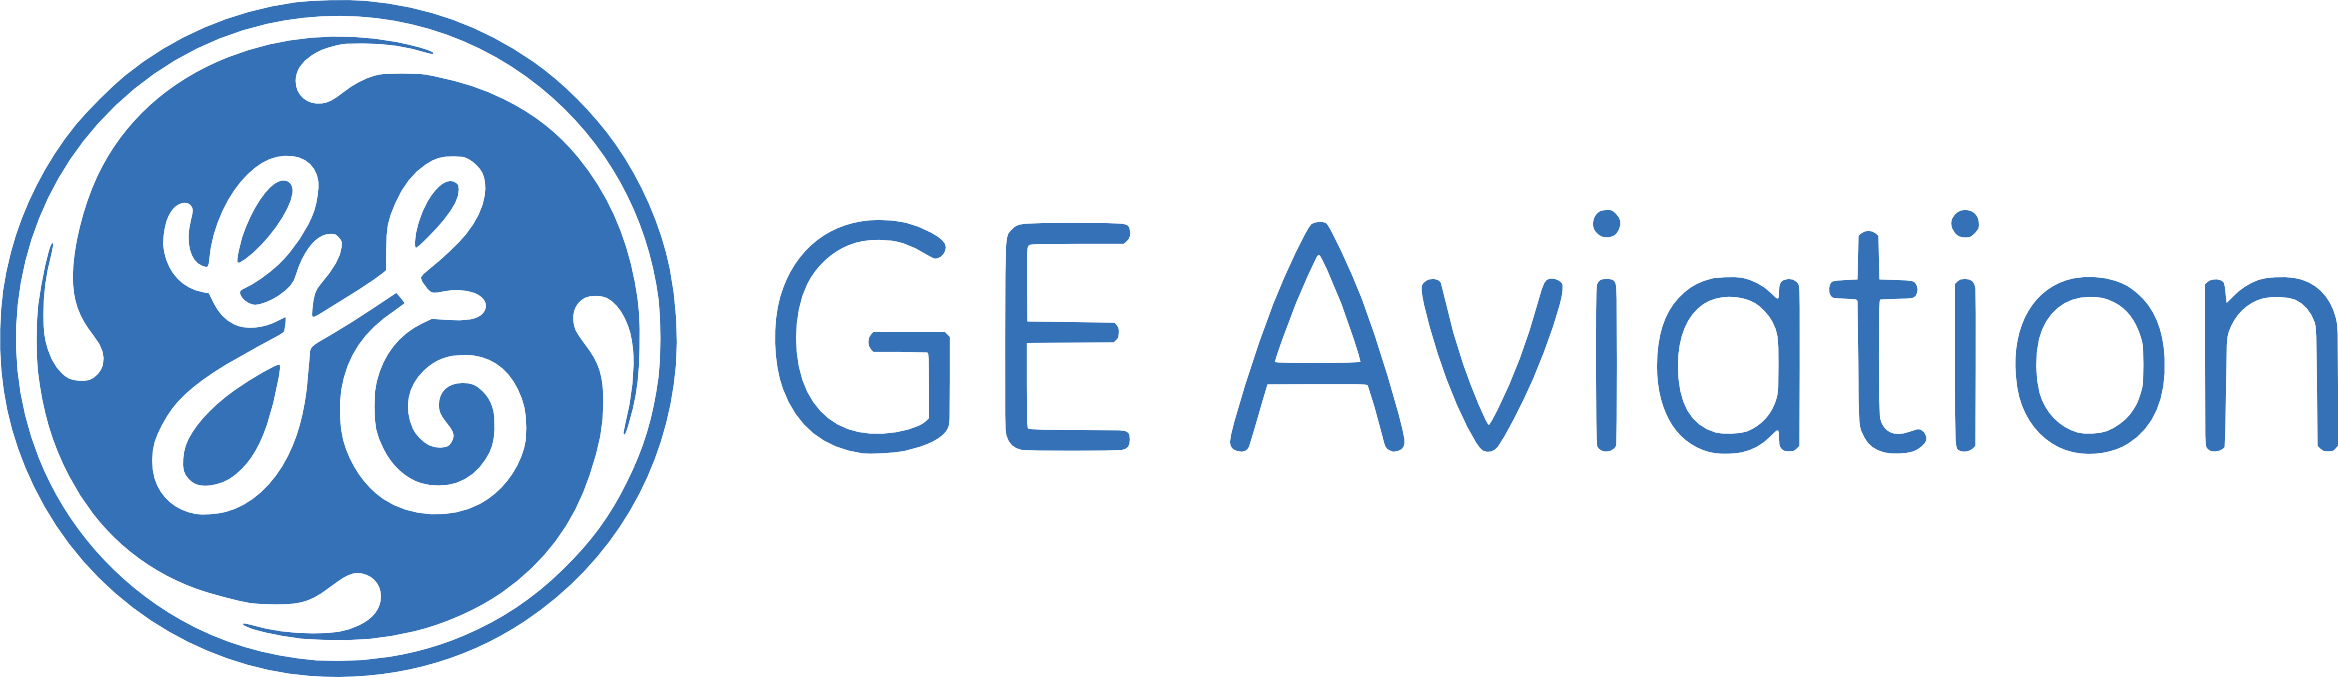 Cooperative Education Program GE aviation logo